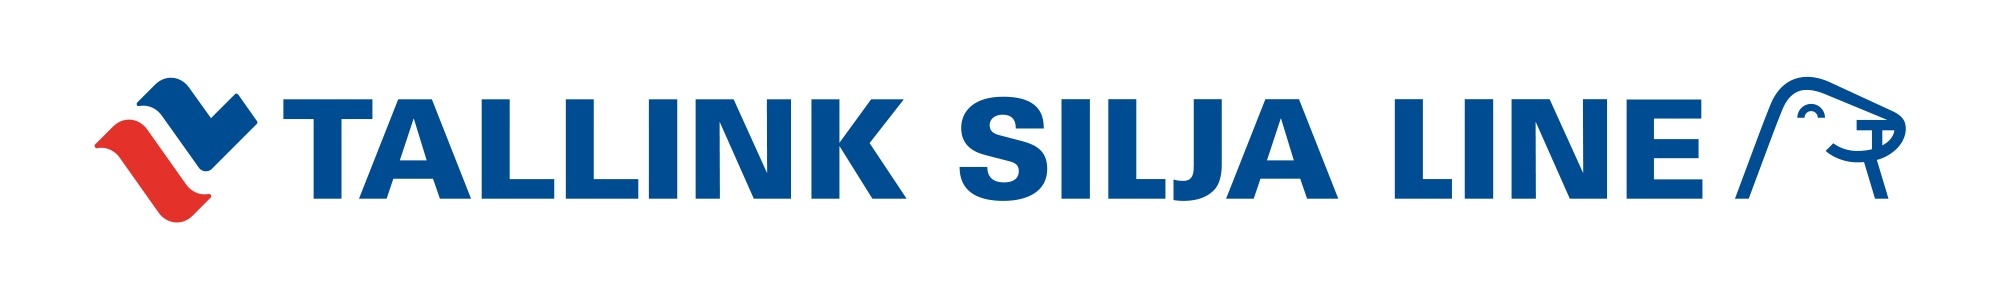 tallink-silja-logo